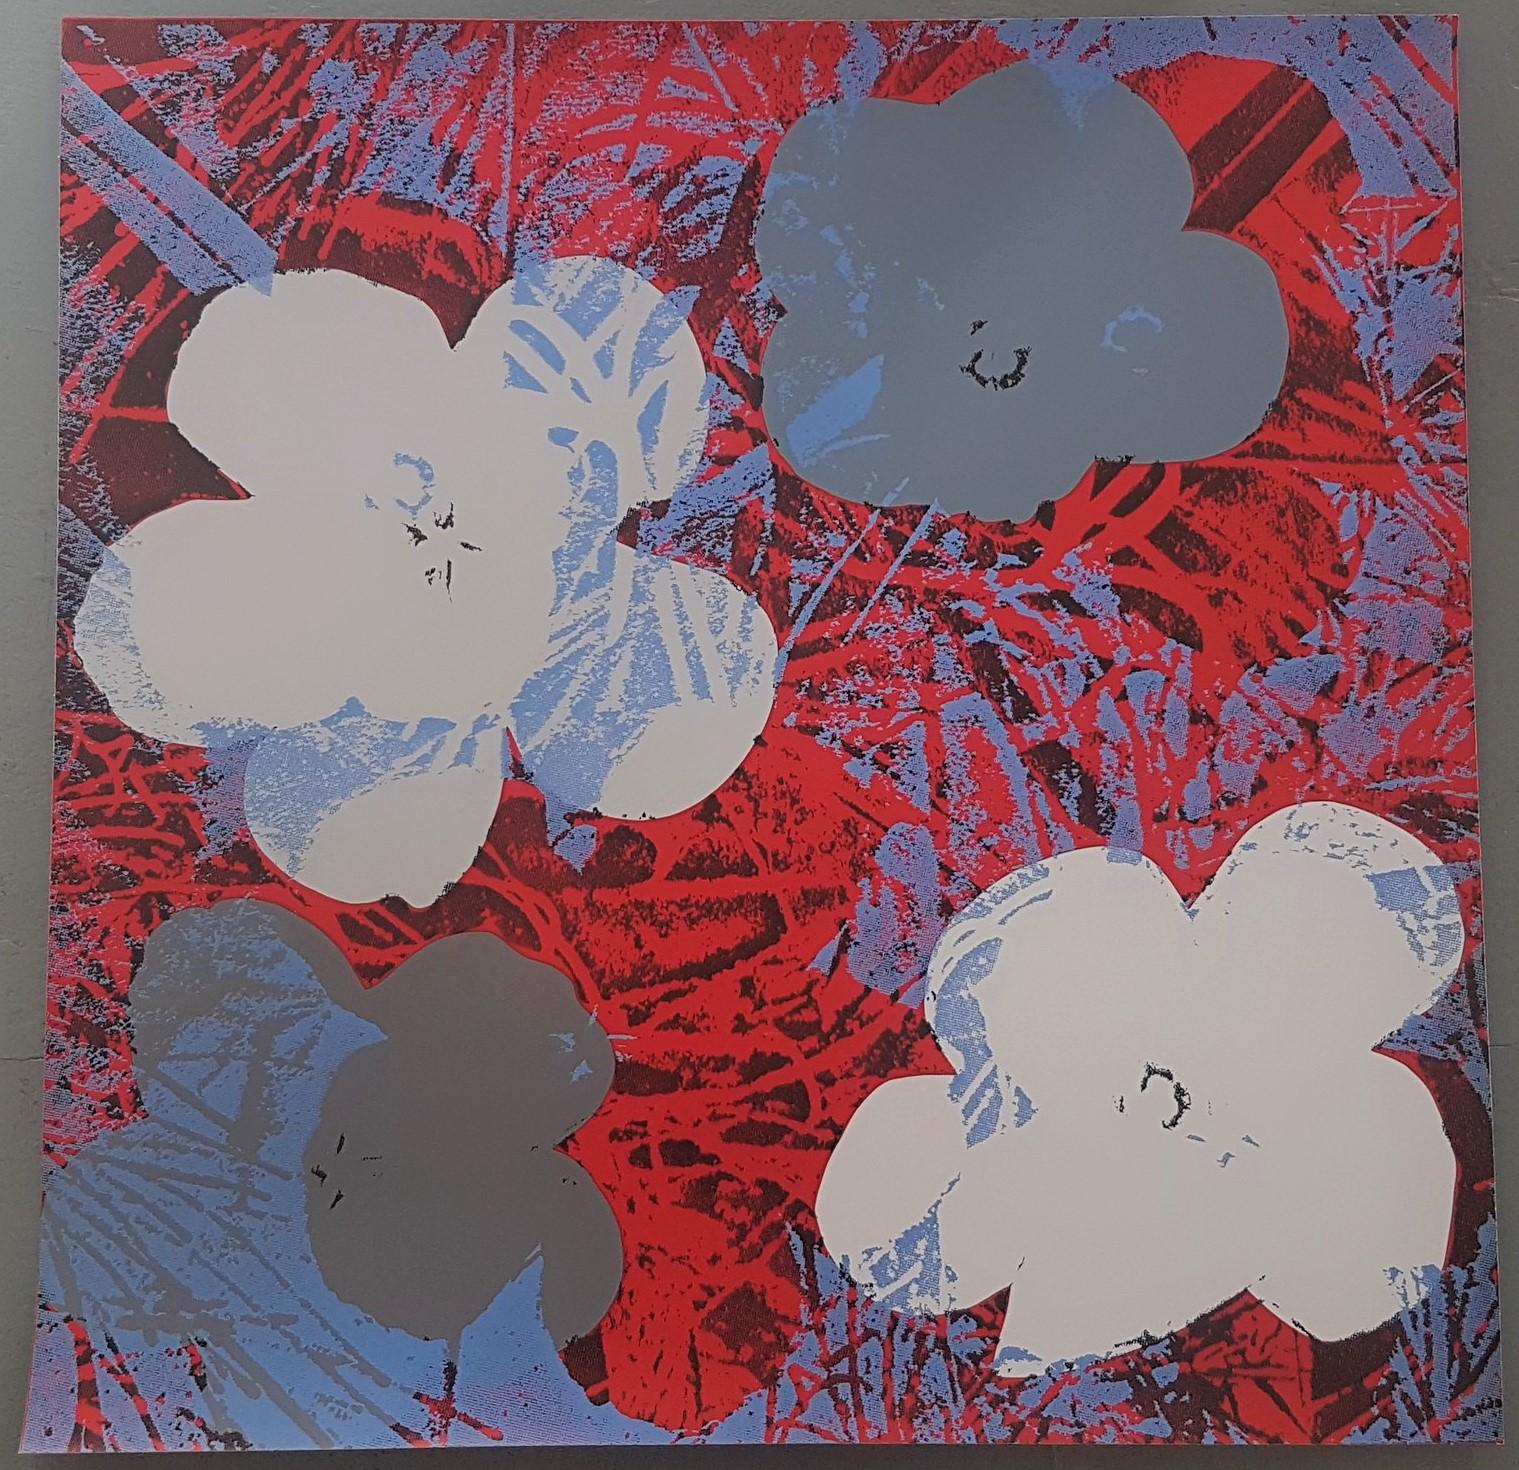 Flowers (Grey and Red Hues - Pop Art) - Print by Jurgen Kuhl 